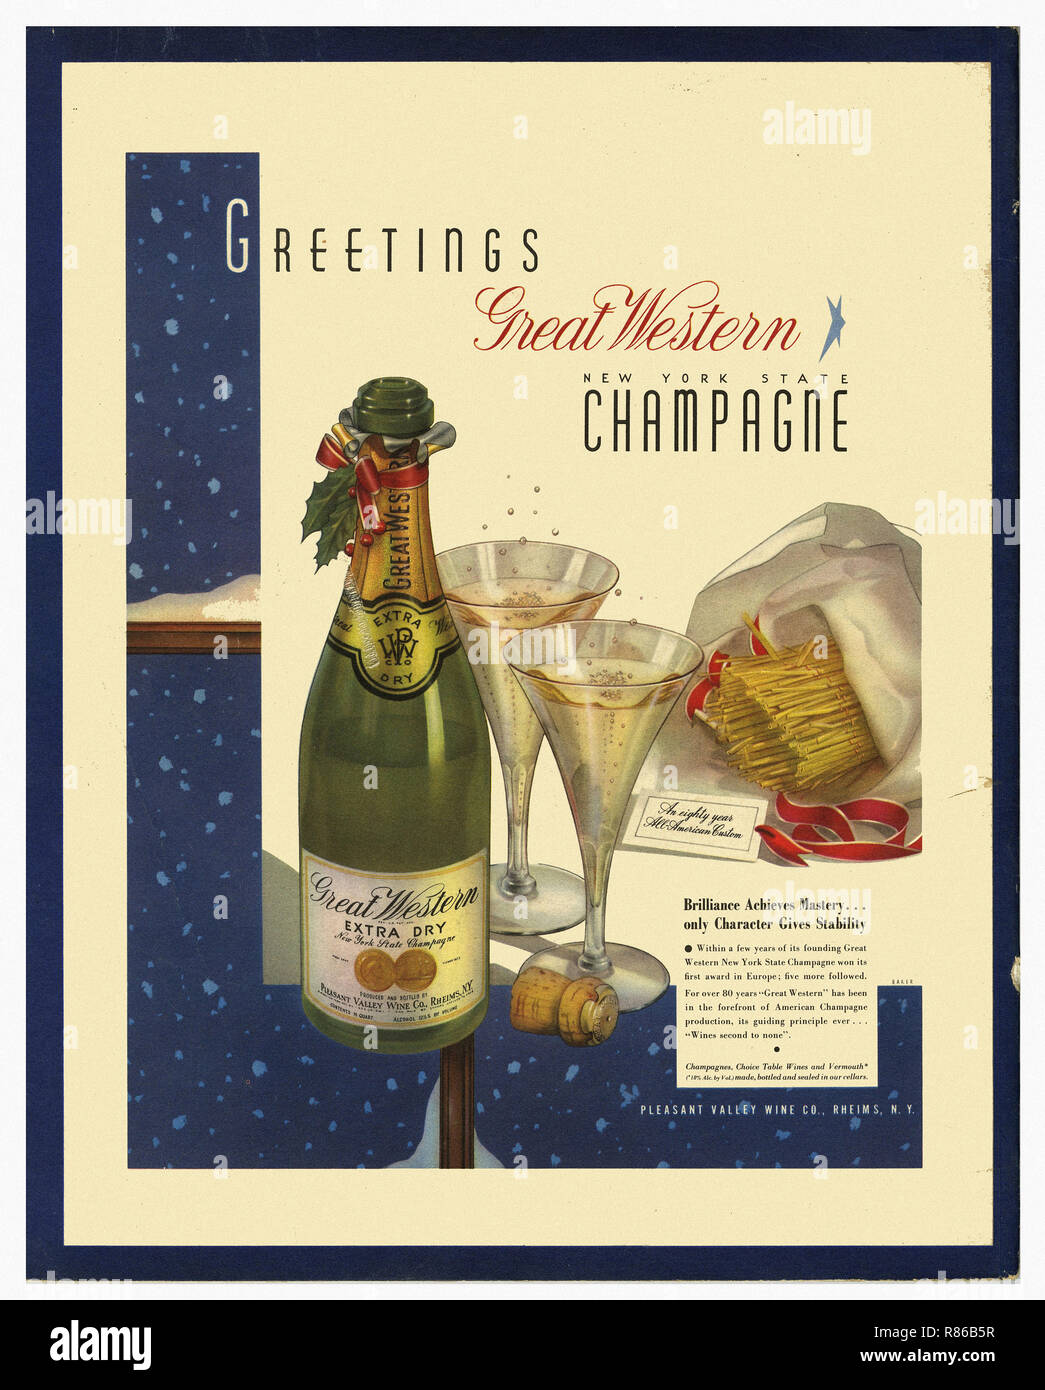 Champagne Veuve Clicquot Art Print by Arnold Van Roessel - Fine Art America